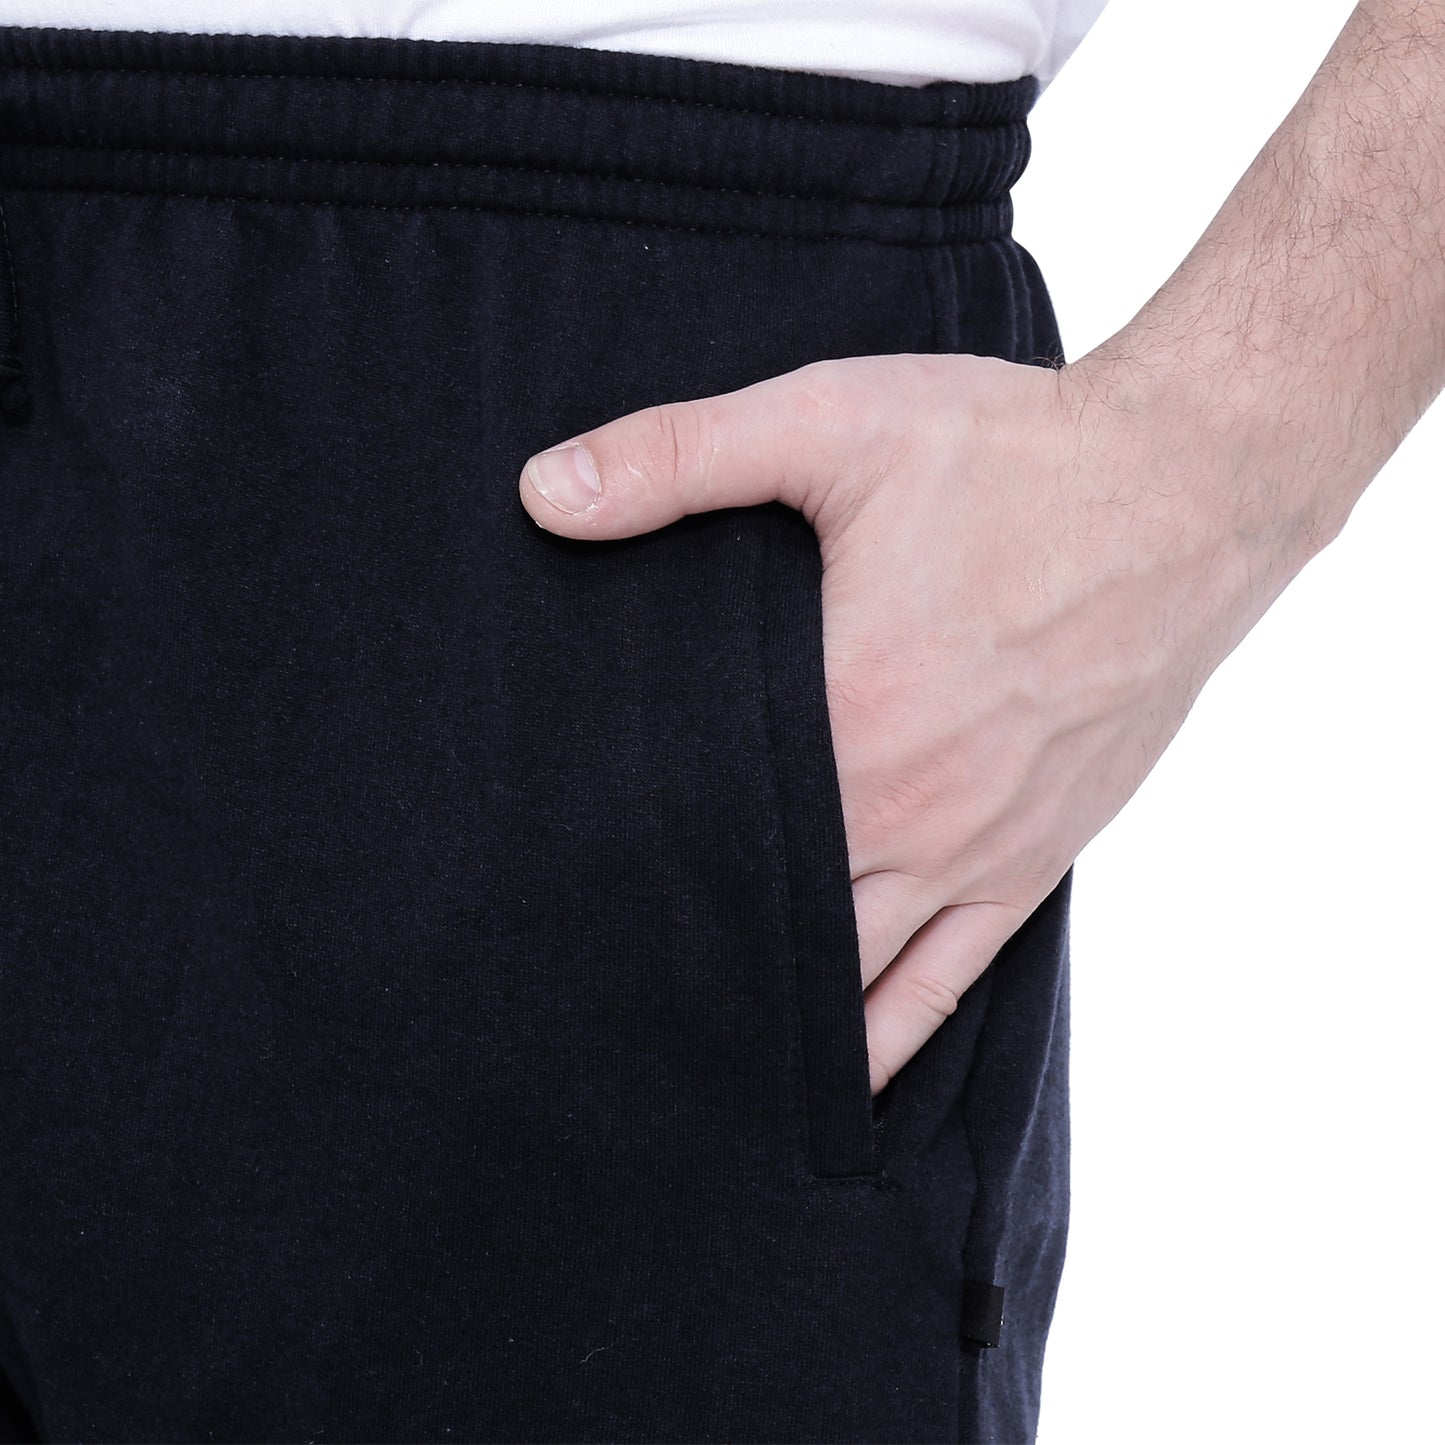 Neo Garments Men's Cotton Sweatpants - Black | SIZES FROM M TO 7XL.